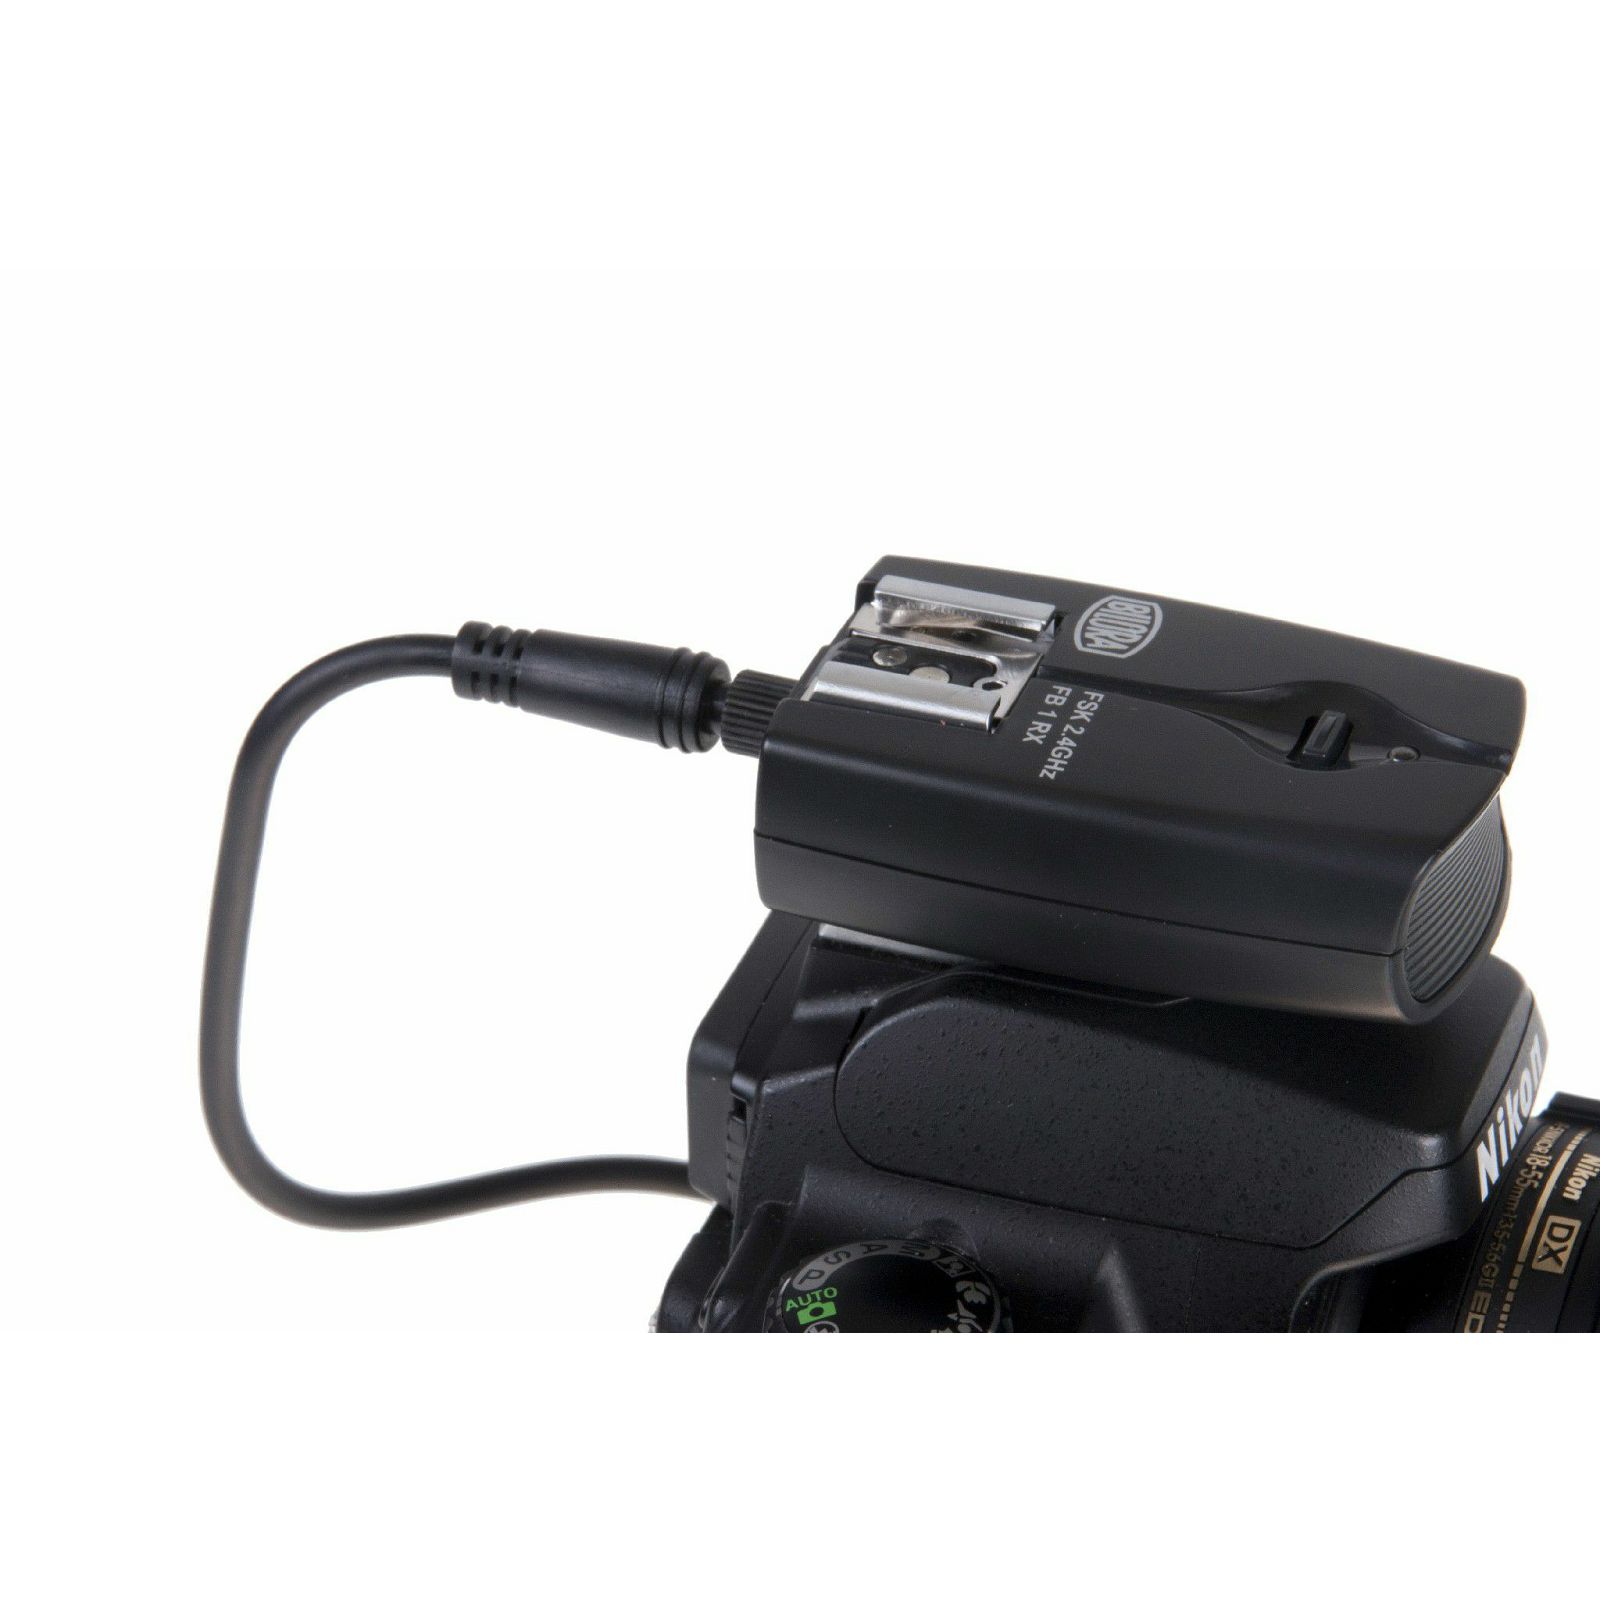 Bilora bežični okidač za bljeskalice FB1-N3 2.4 GHz N3 Nikon (komplet odašiljač + prijemnik) D750, D500, D610, D7200, D5600, D5500, D5300, D3400, D3300, D7100